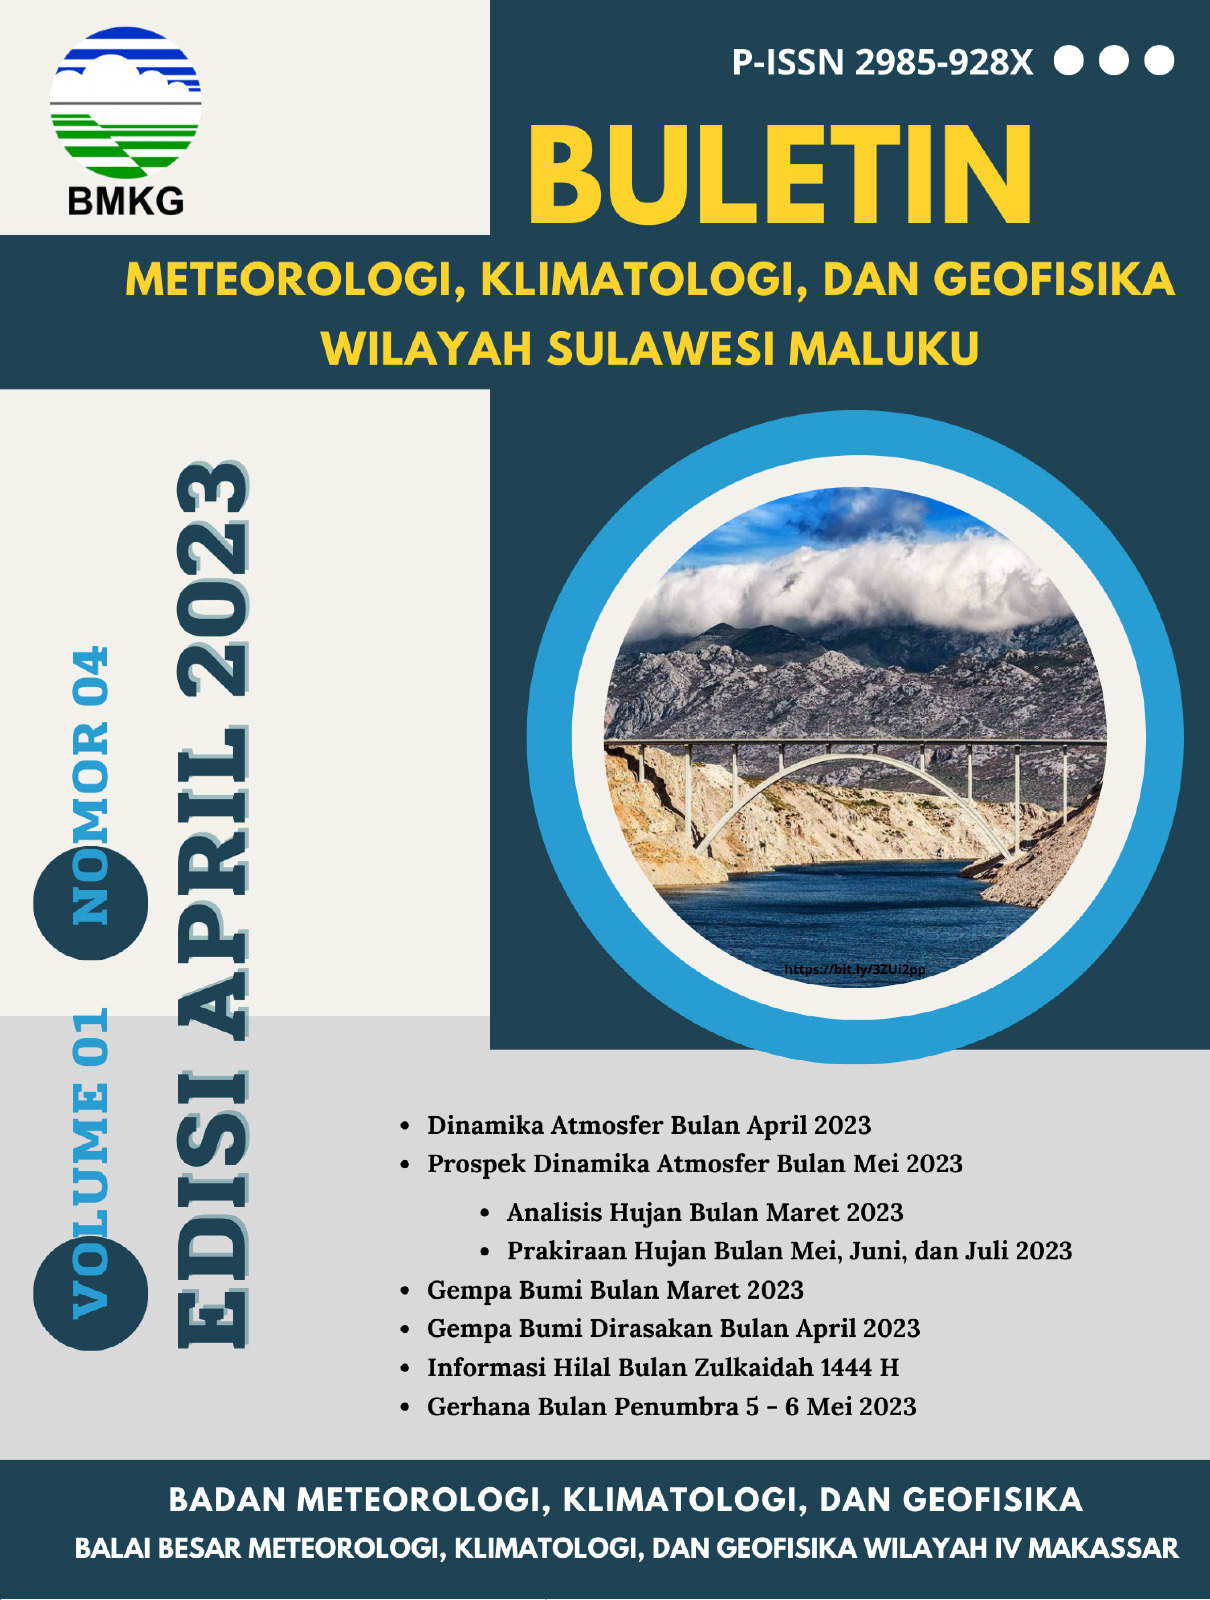 Buletin MKG Sulawesi Maluku Edisi April 2023